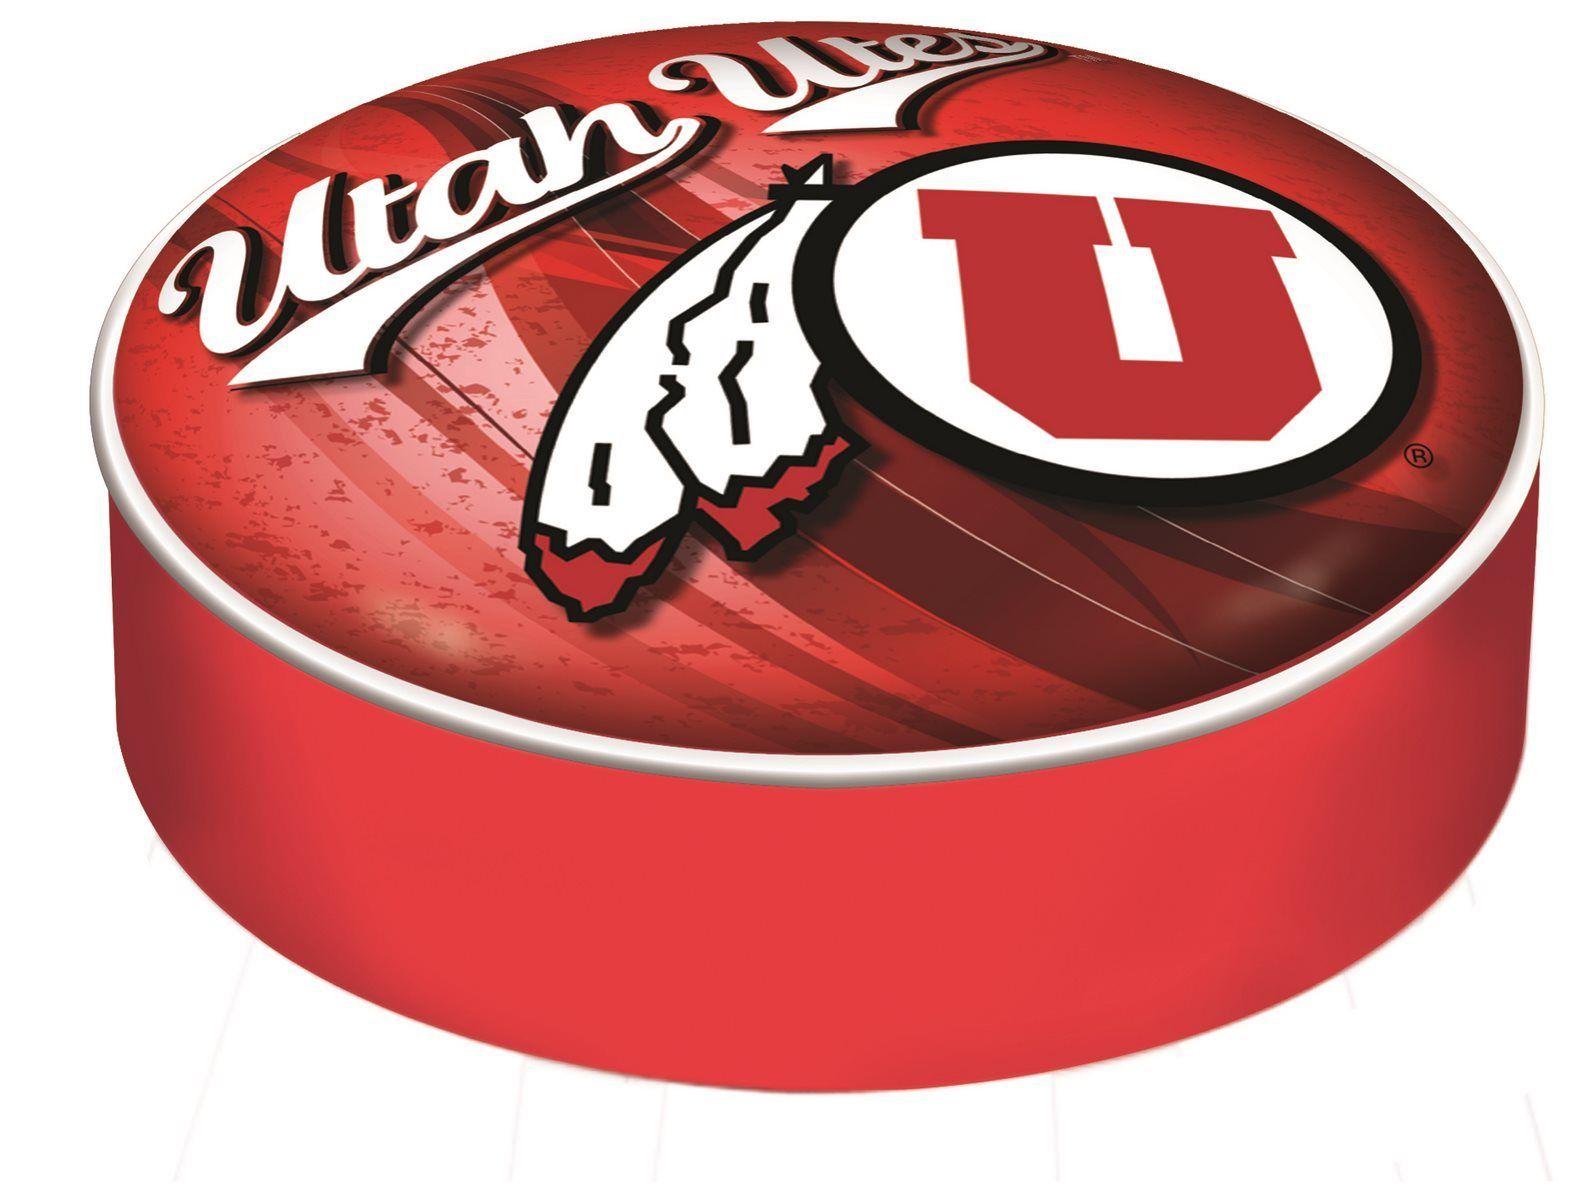 University of Utah Utes Logo - University of Utah Seat Cover Utes Logo